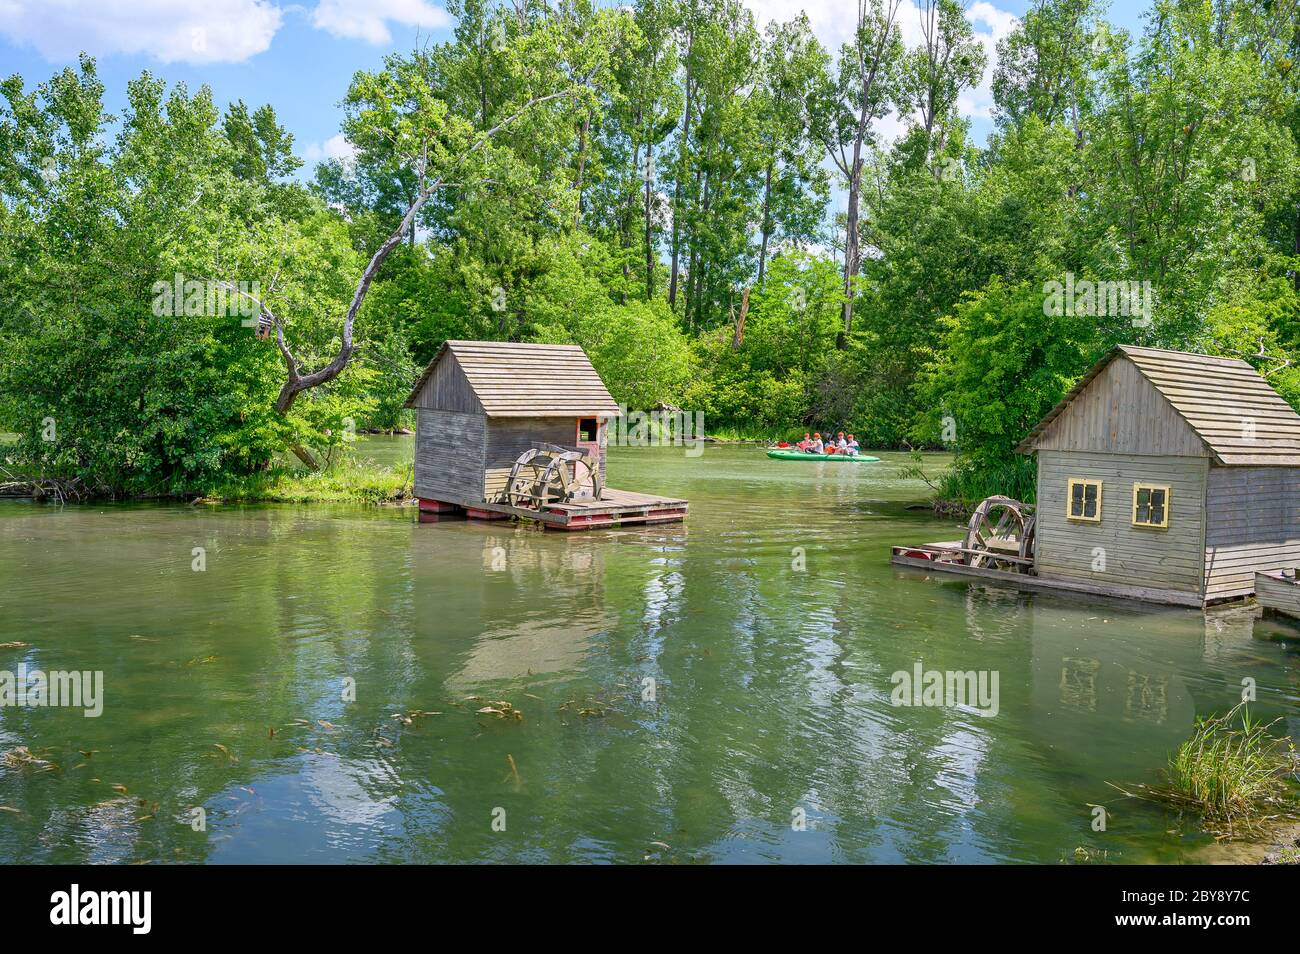 Korzo Zalesie - area for leisure activities by Little Danube river in village of Zalesie (SLOVAKIA) Stock Photo